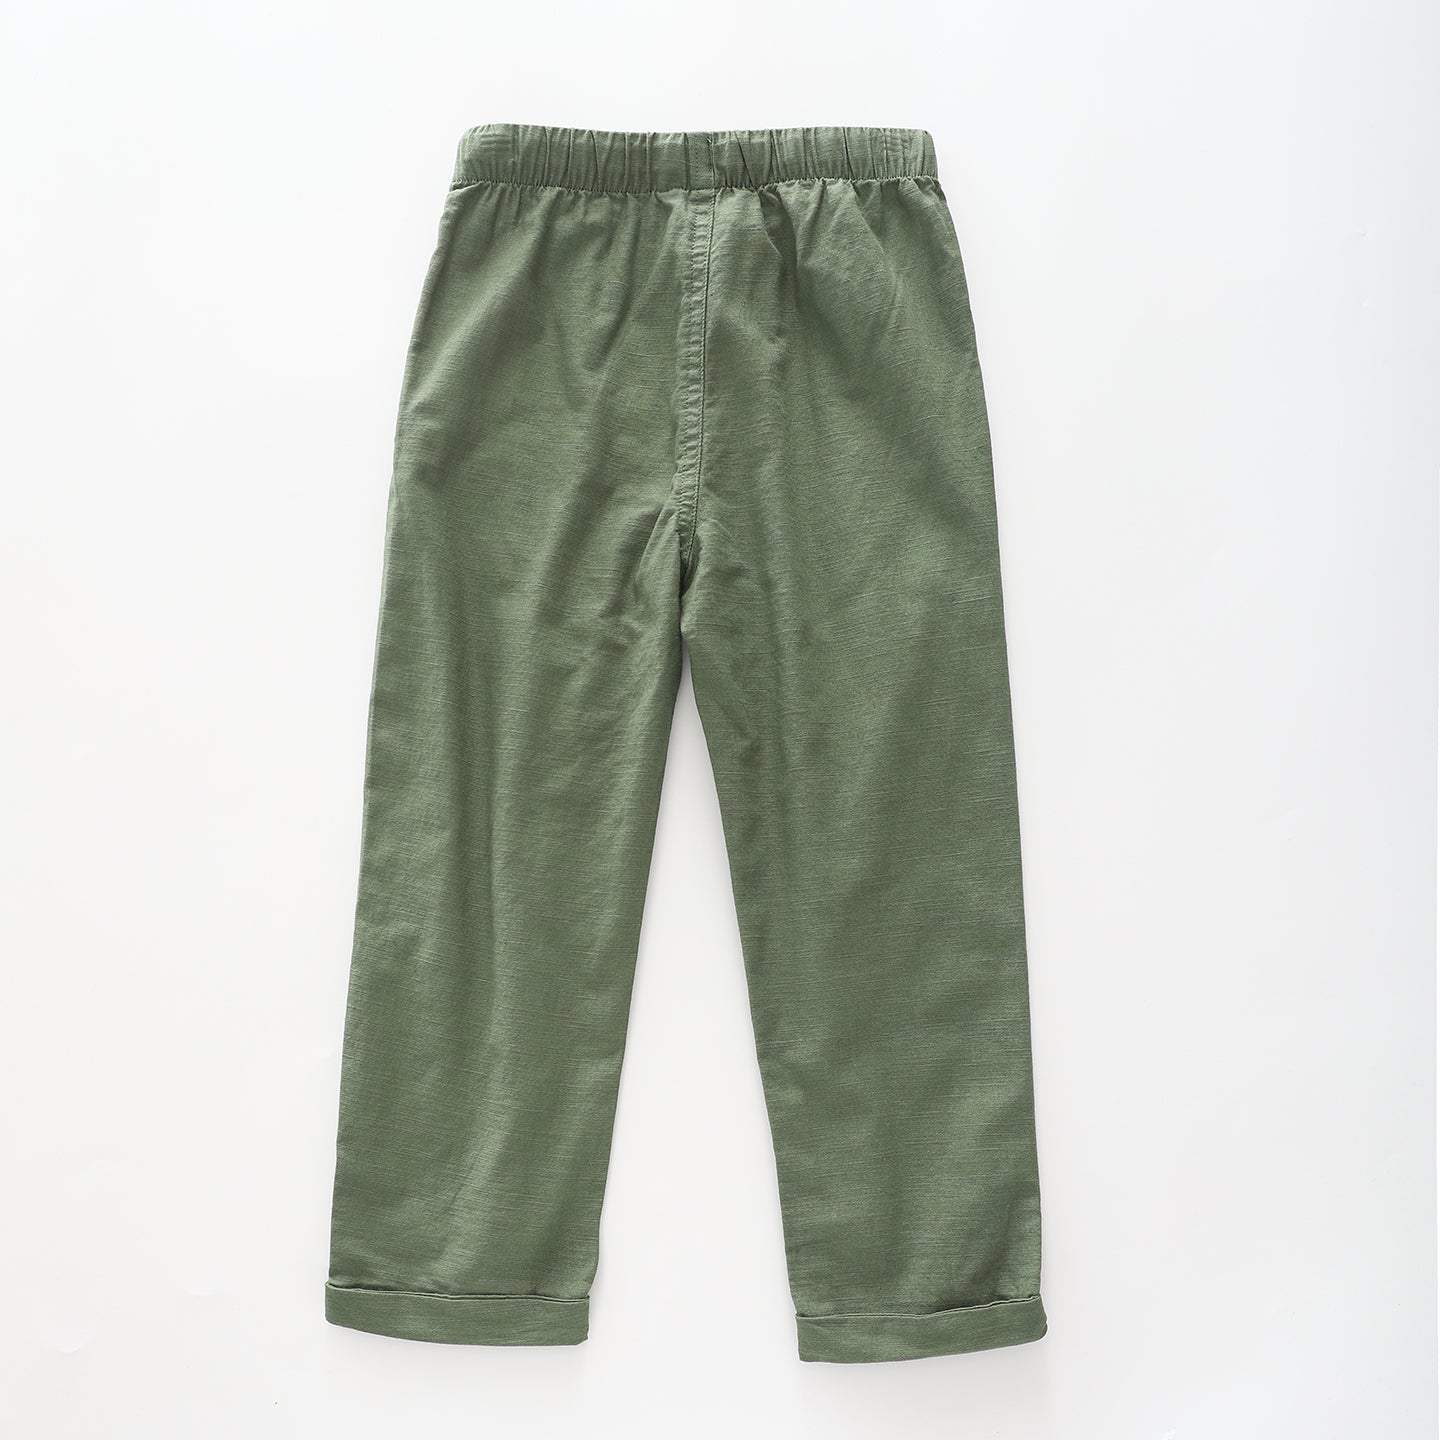 Boy's Khaki Green Linen Pants With Drawstring Waist